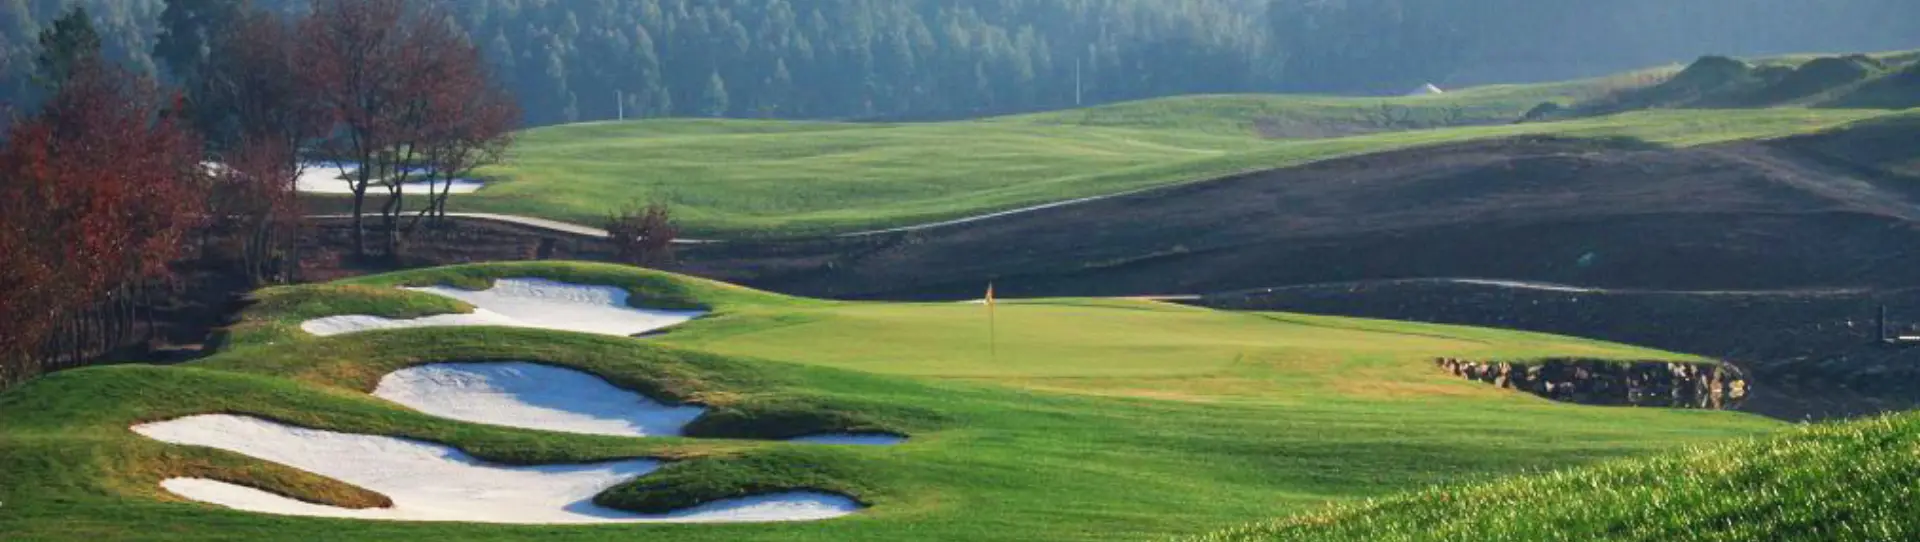 Portugal golf courses - Vale Pisão - Photo 3